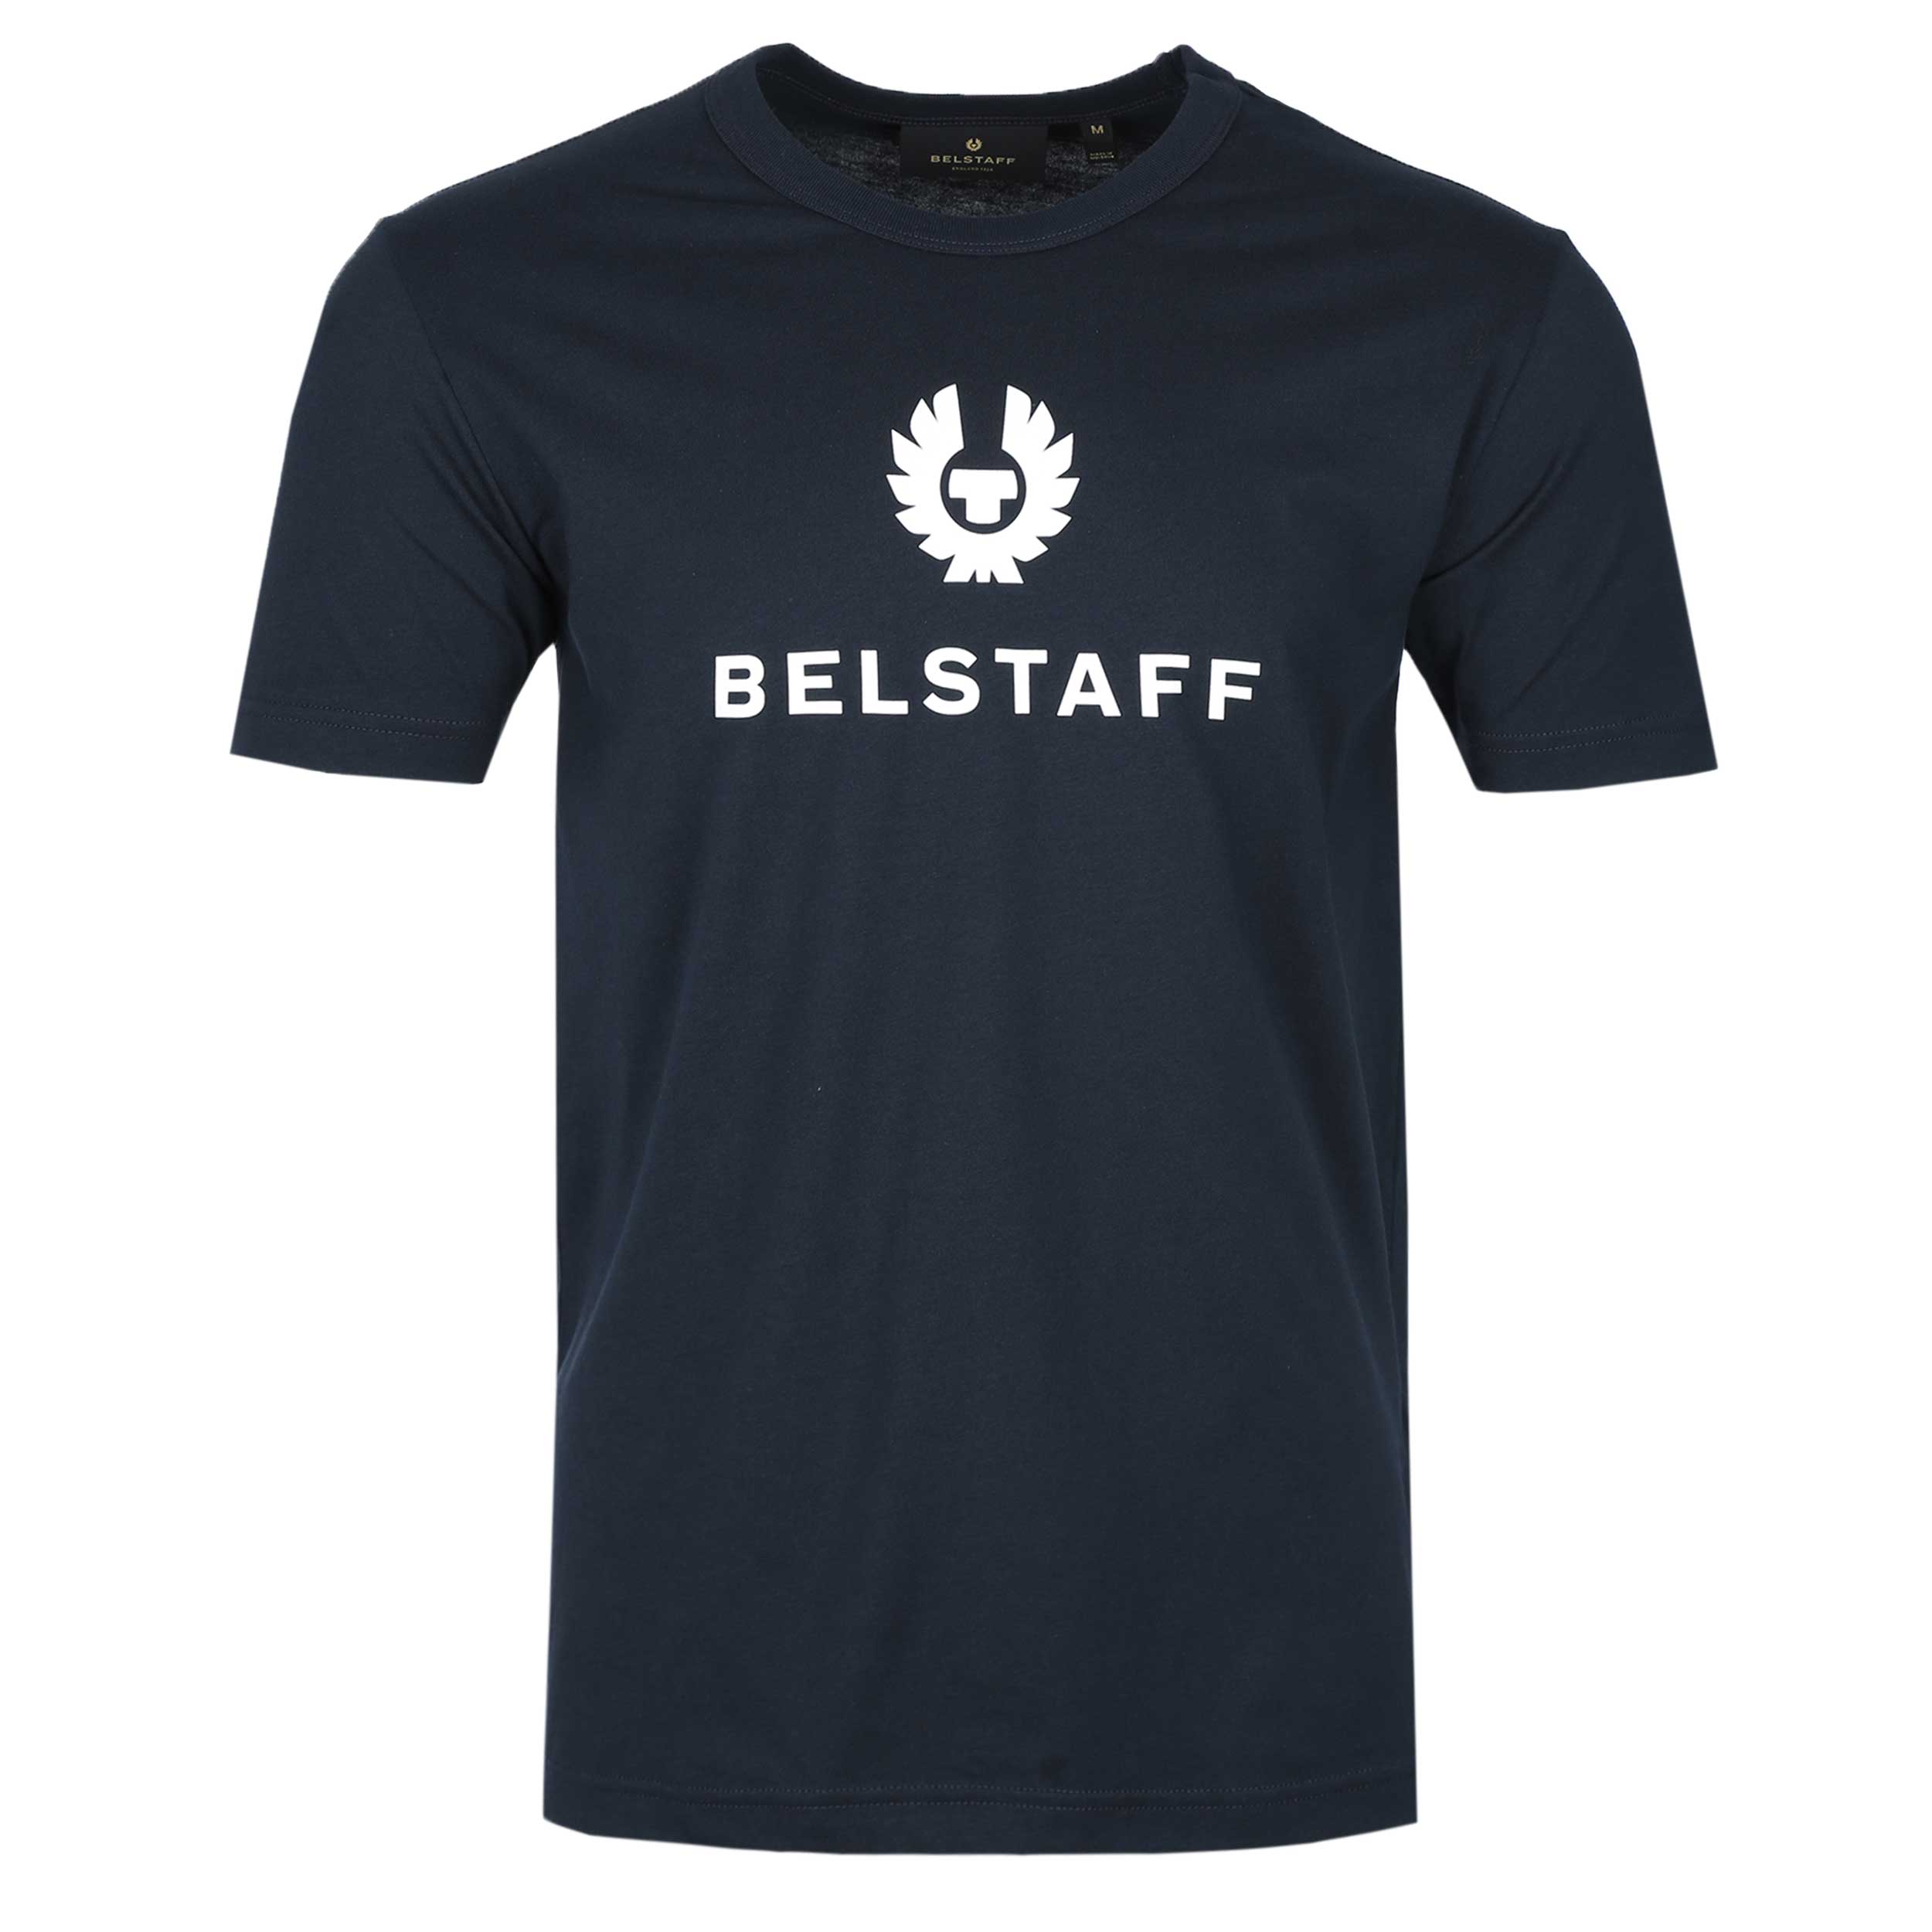 Belstaff Signature T Shirt in Dark Ink